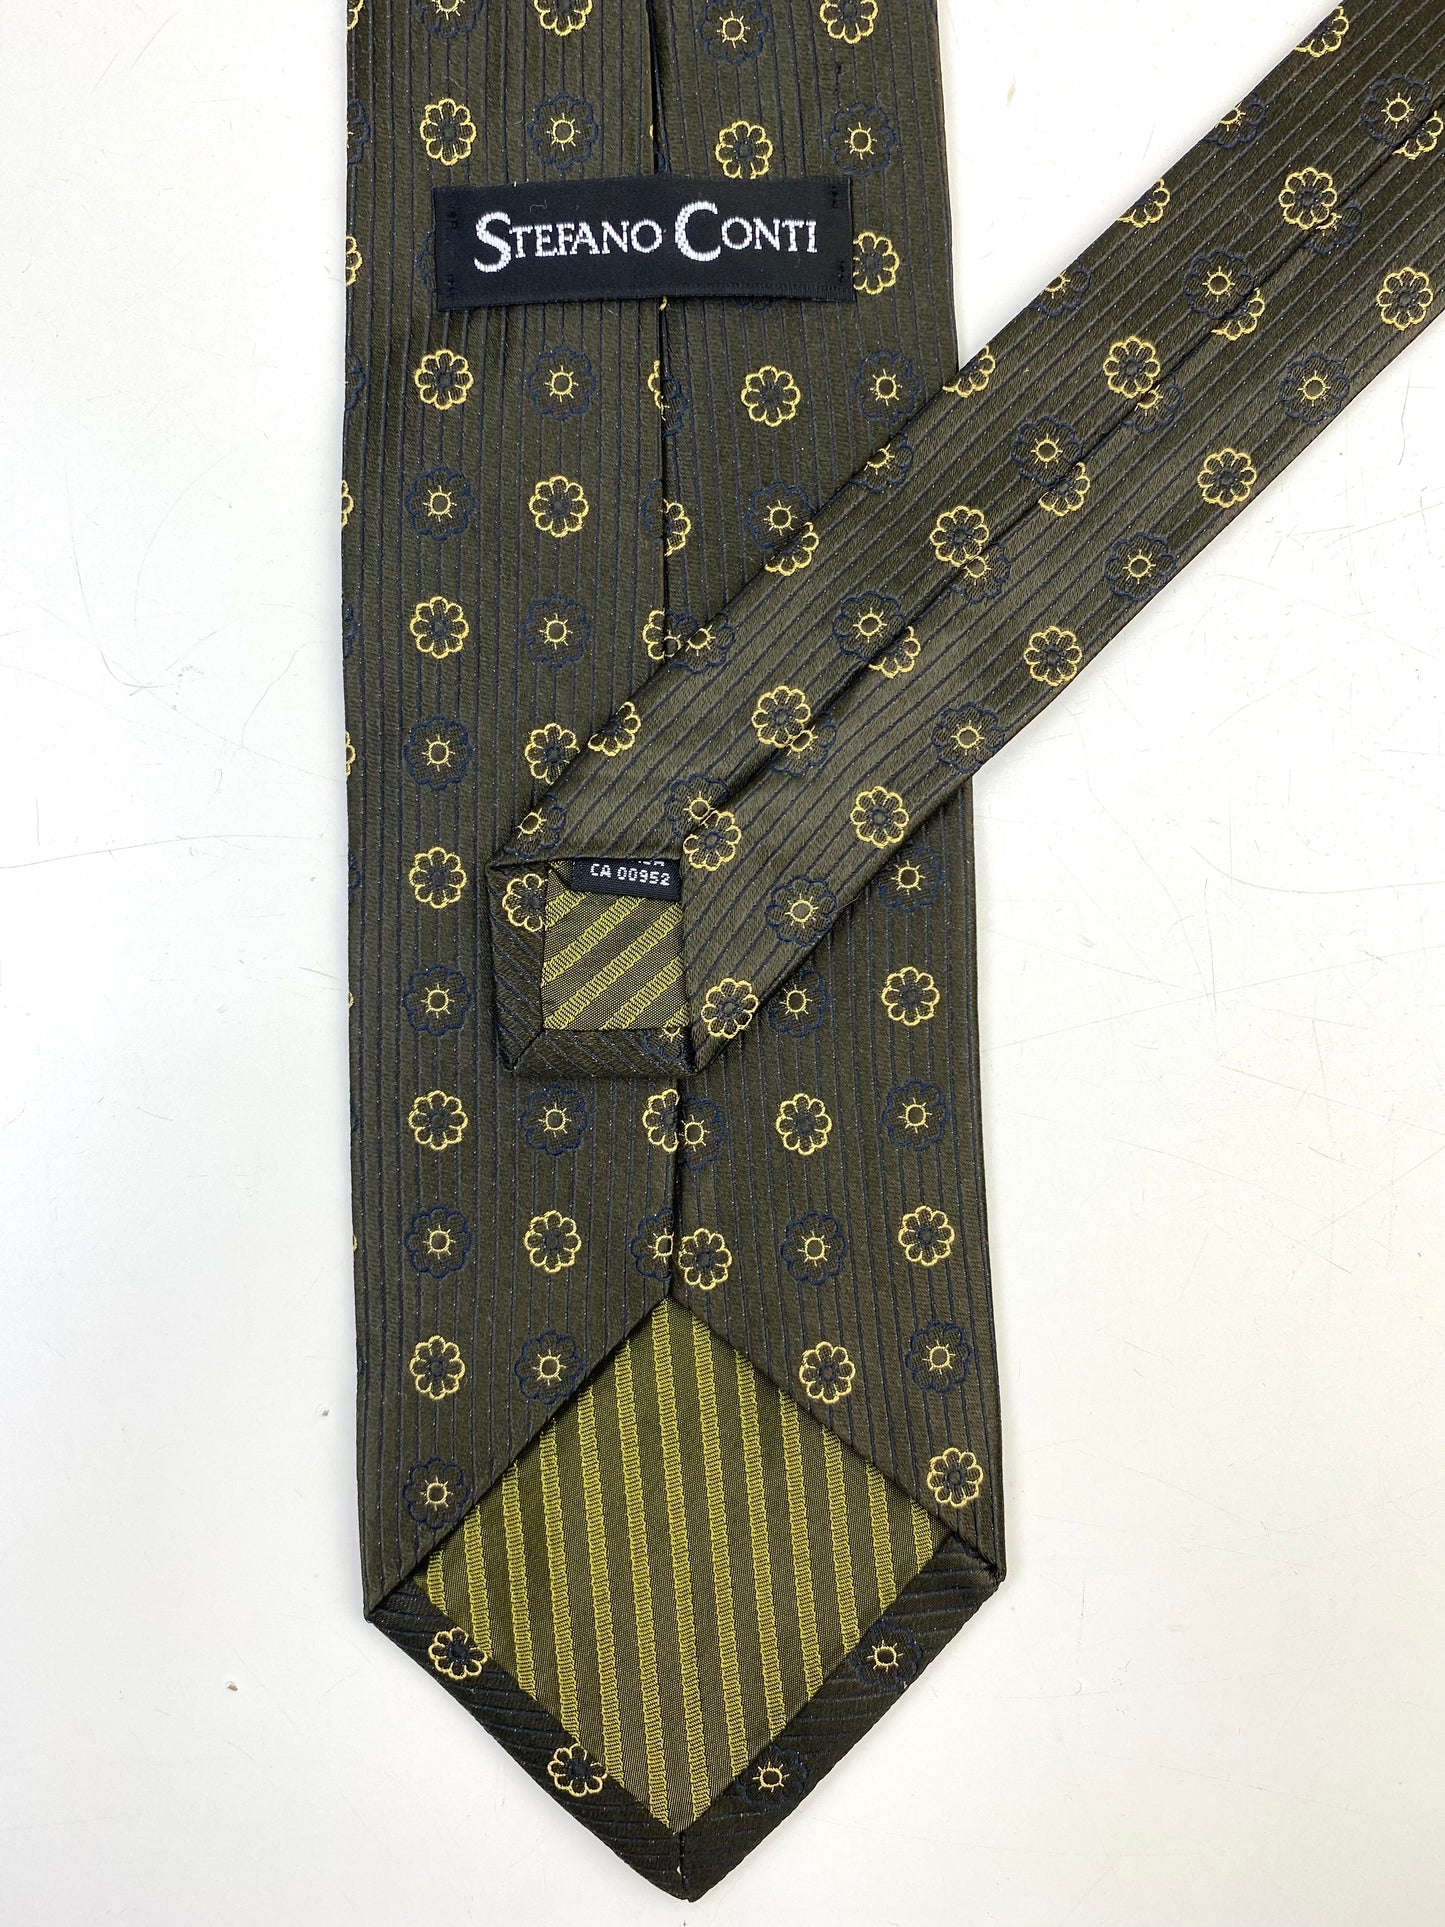 90s Deadstock Silk Necktie, Men's Vintage Gold/Green Geometric Pattern Tie, NOS